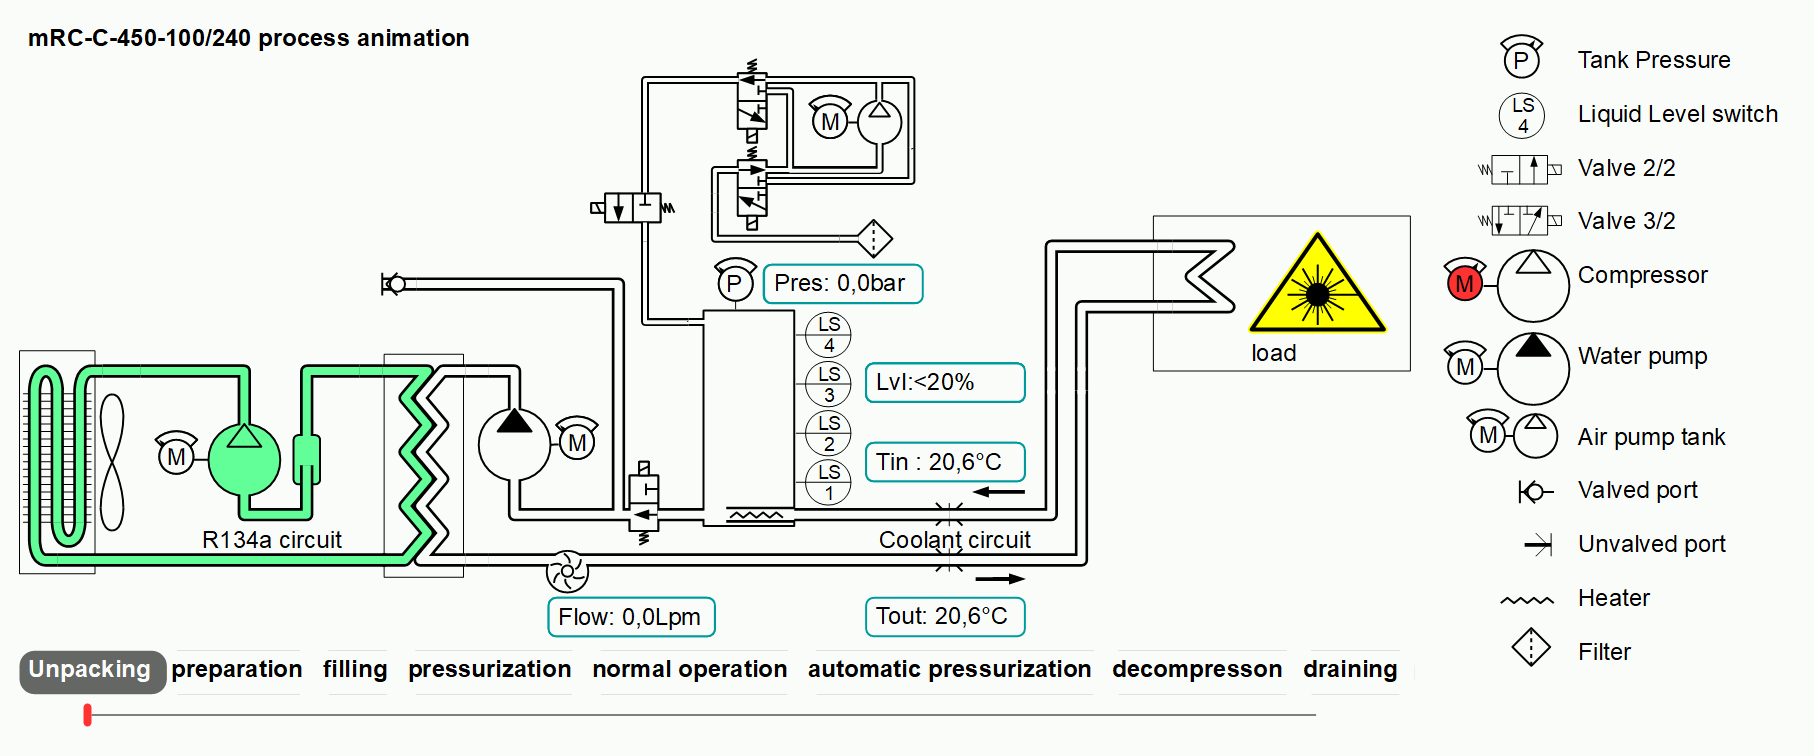 Process animation of mRC-C-450-100_240 mini Recirculating Chiller